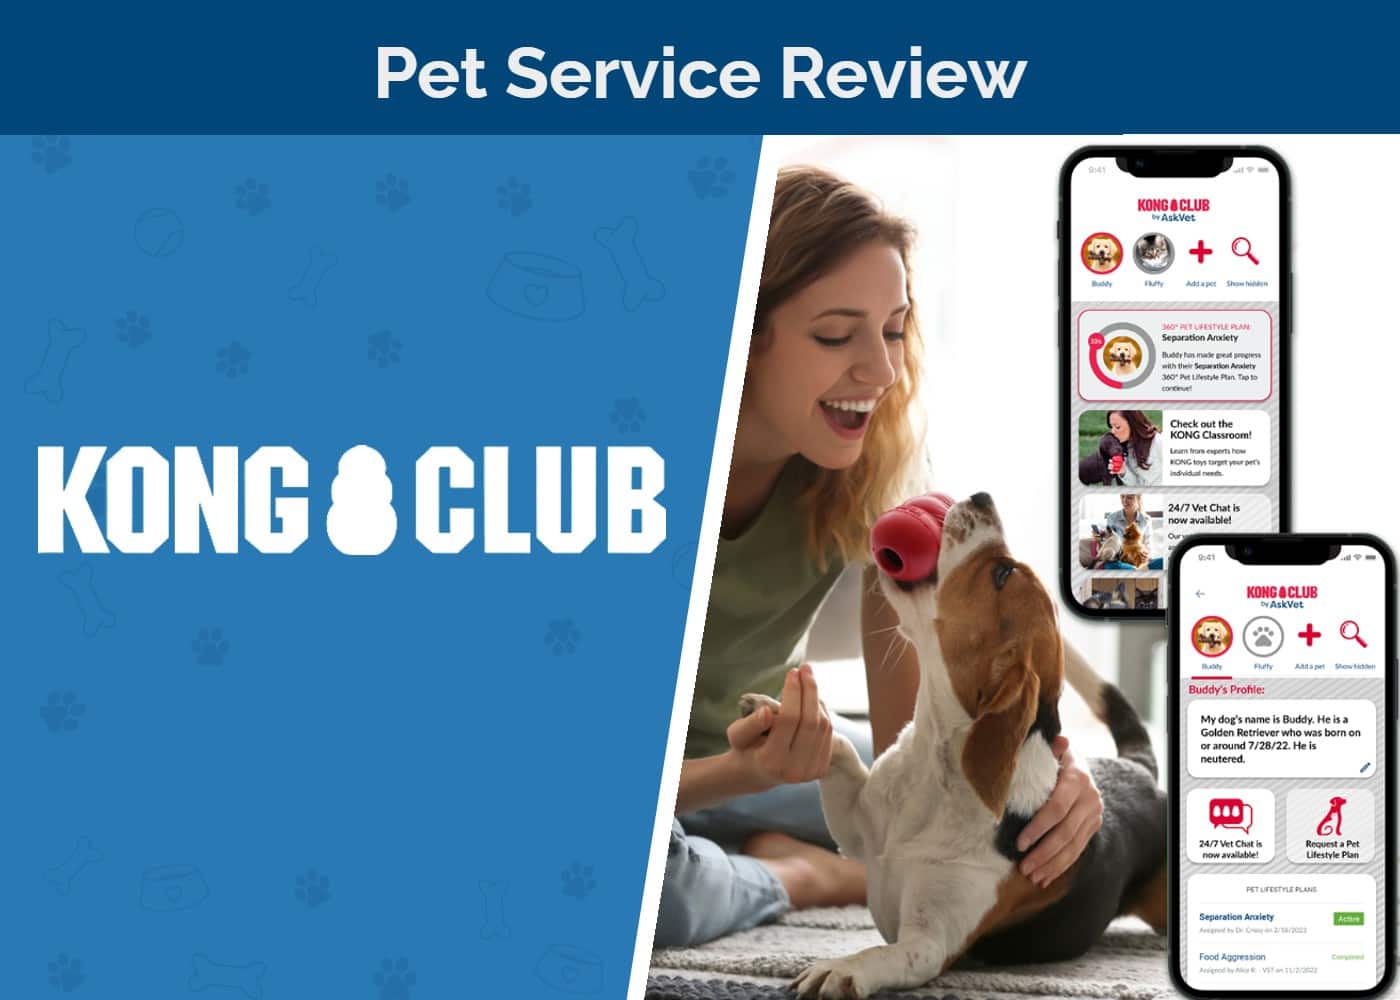 Kong-Club-Pet-Service-Review-SAPR-FT